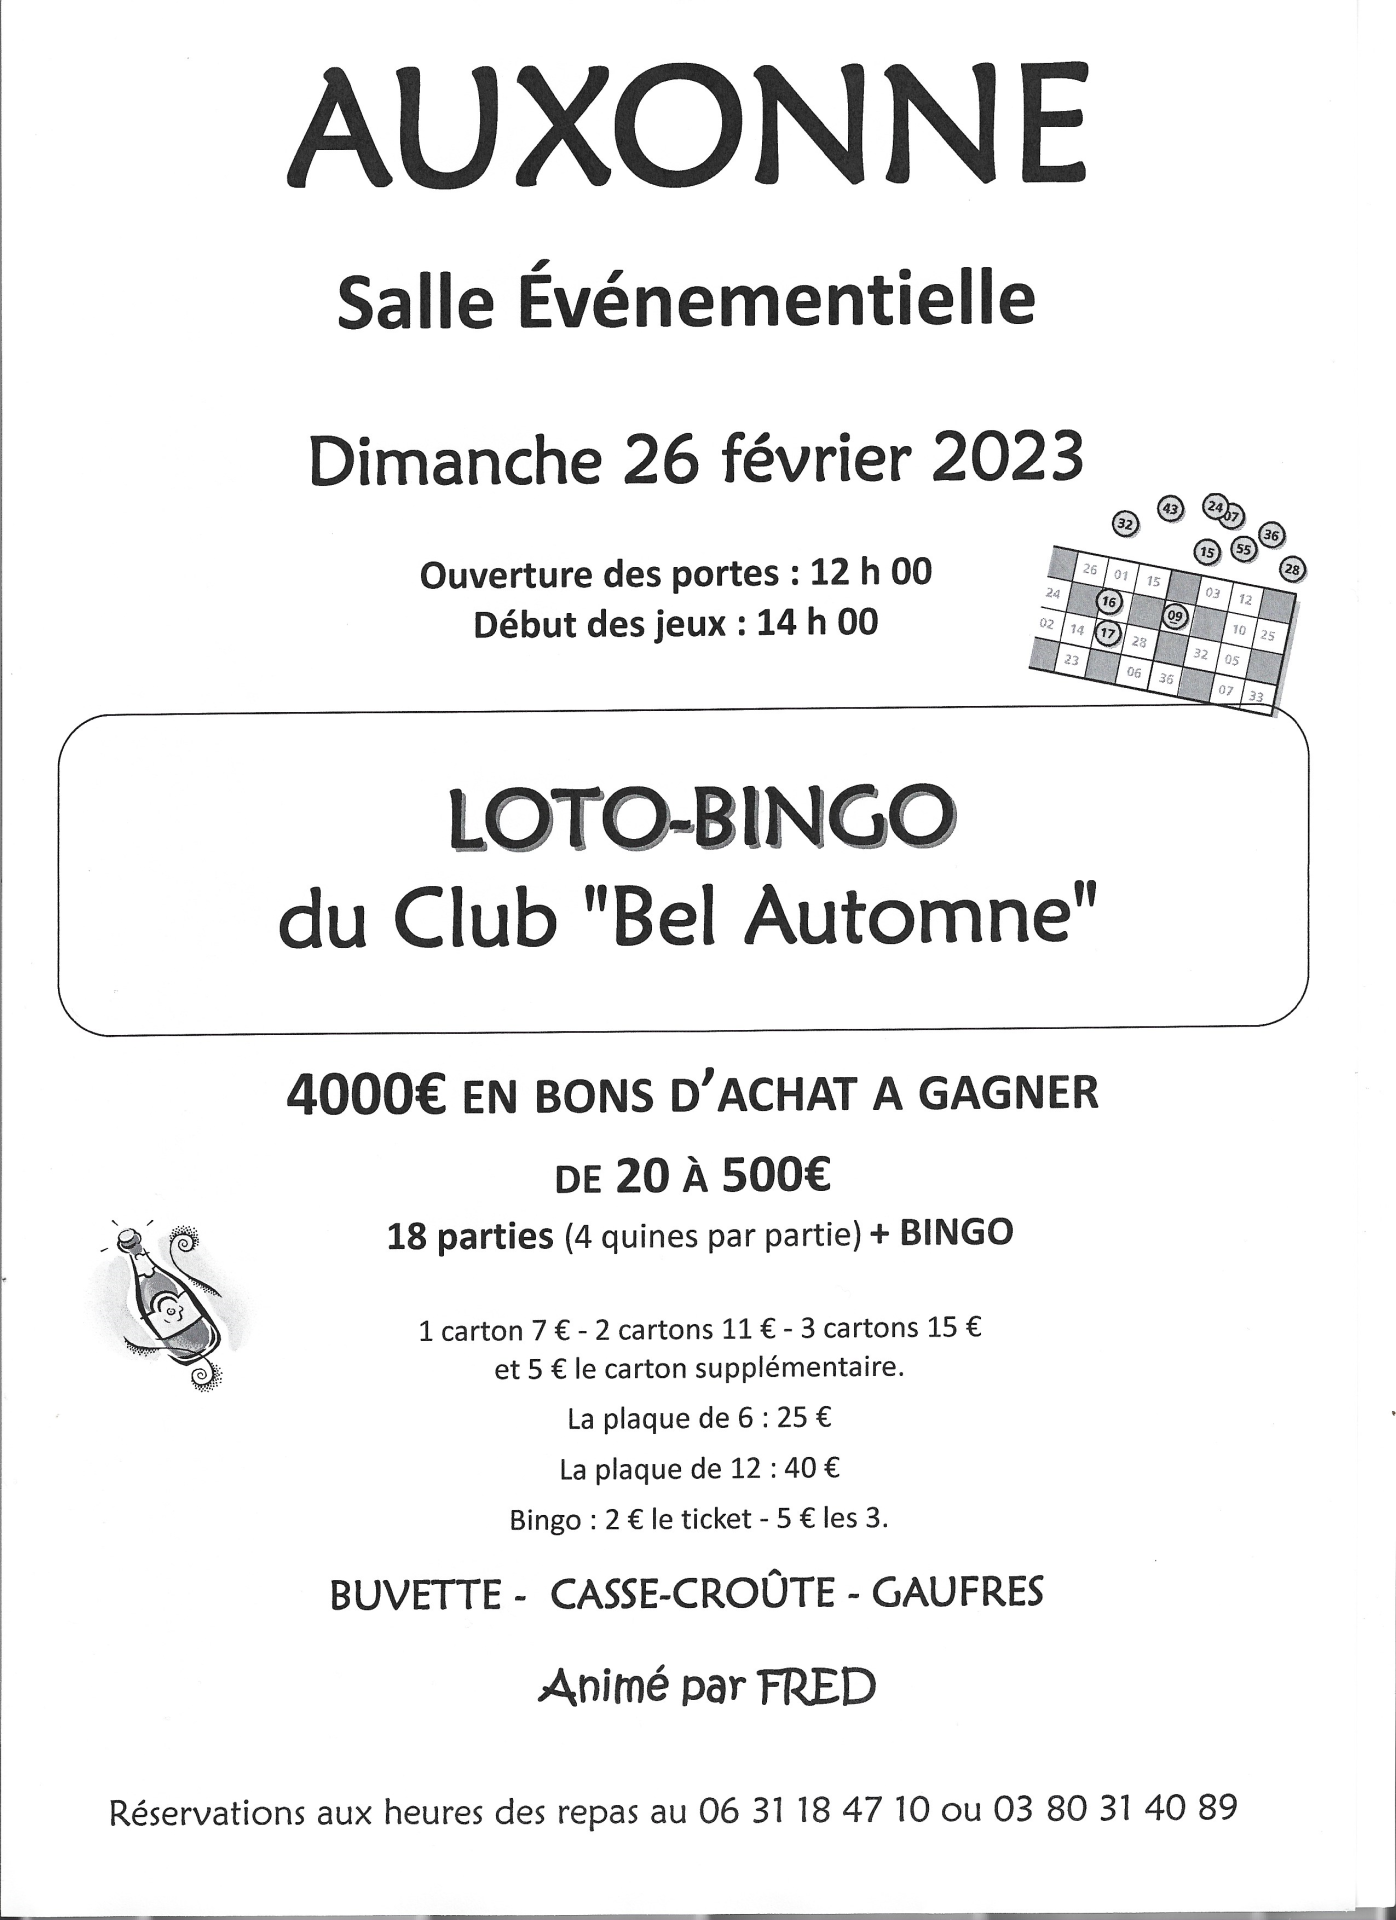 Loto-Bingo du Club "Bel Automne"